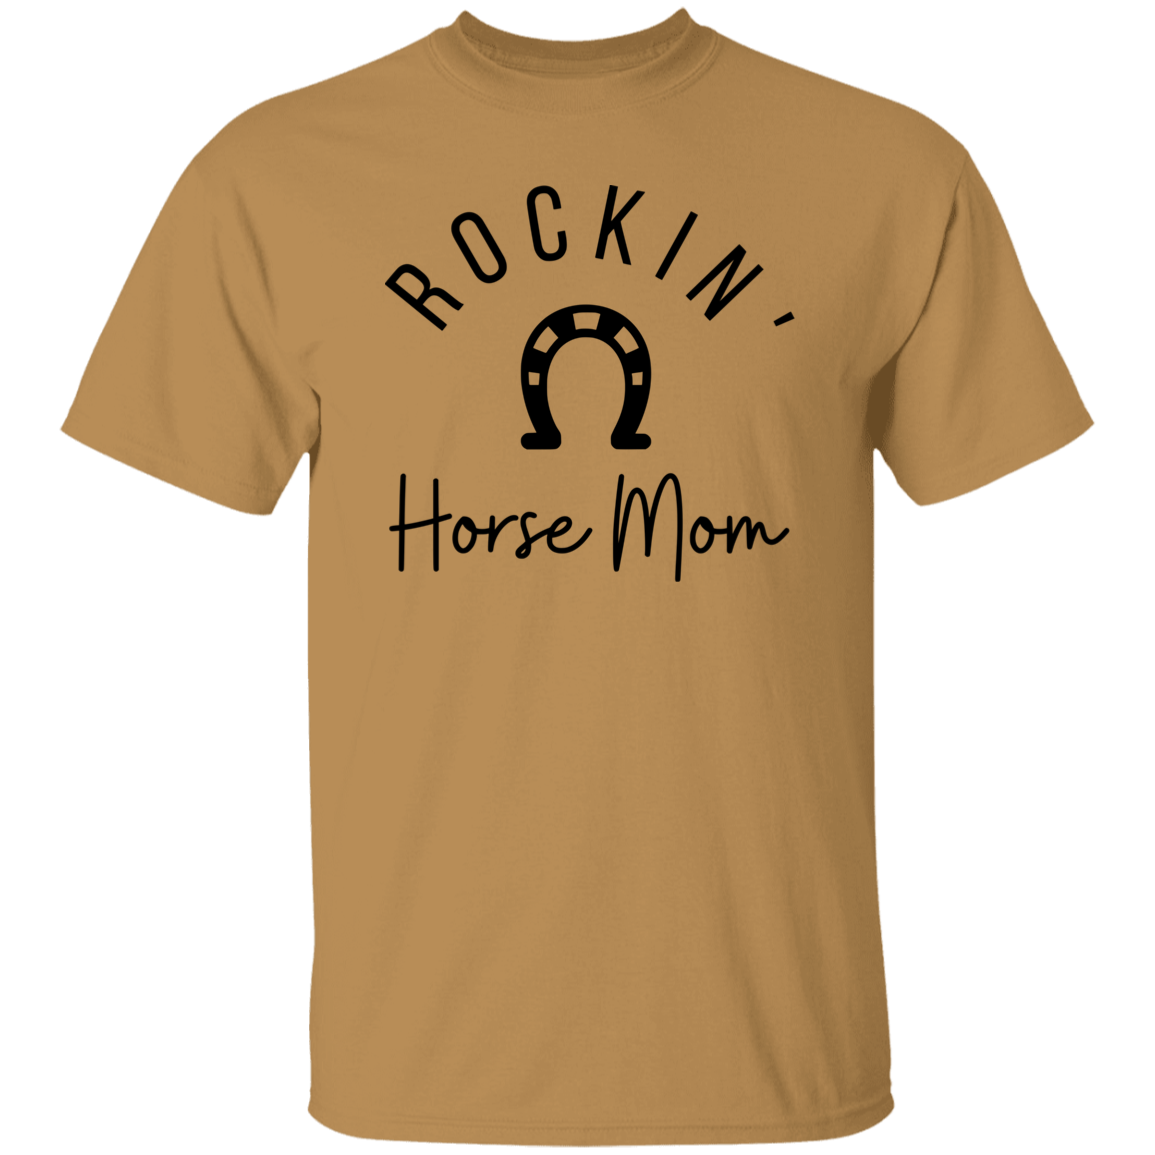 Rockin' Horse Mom Tshirt